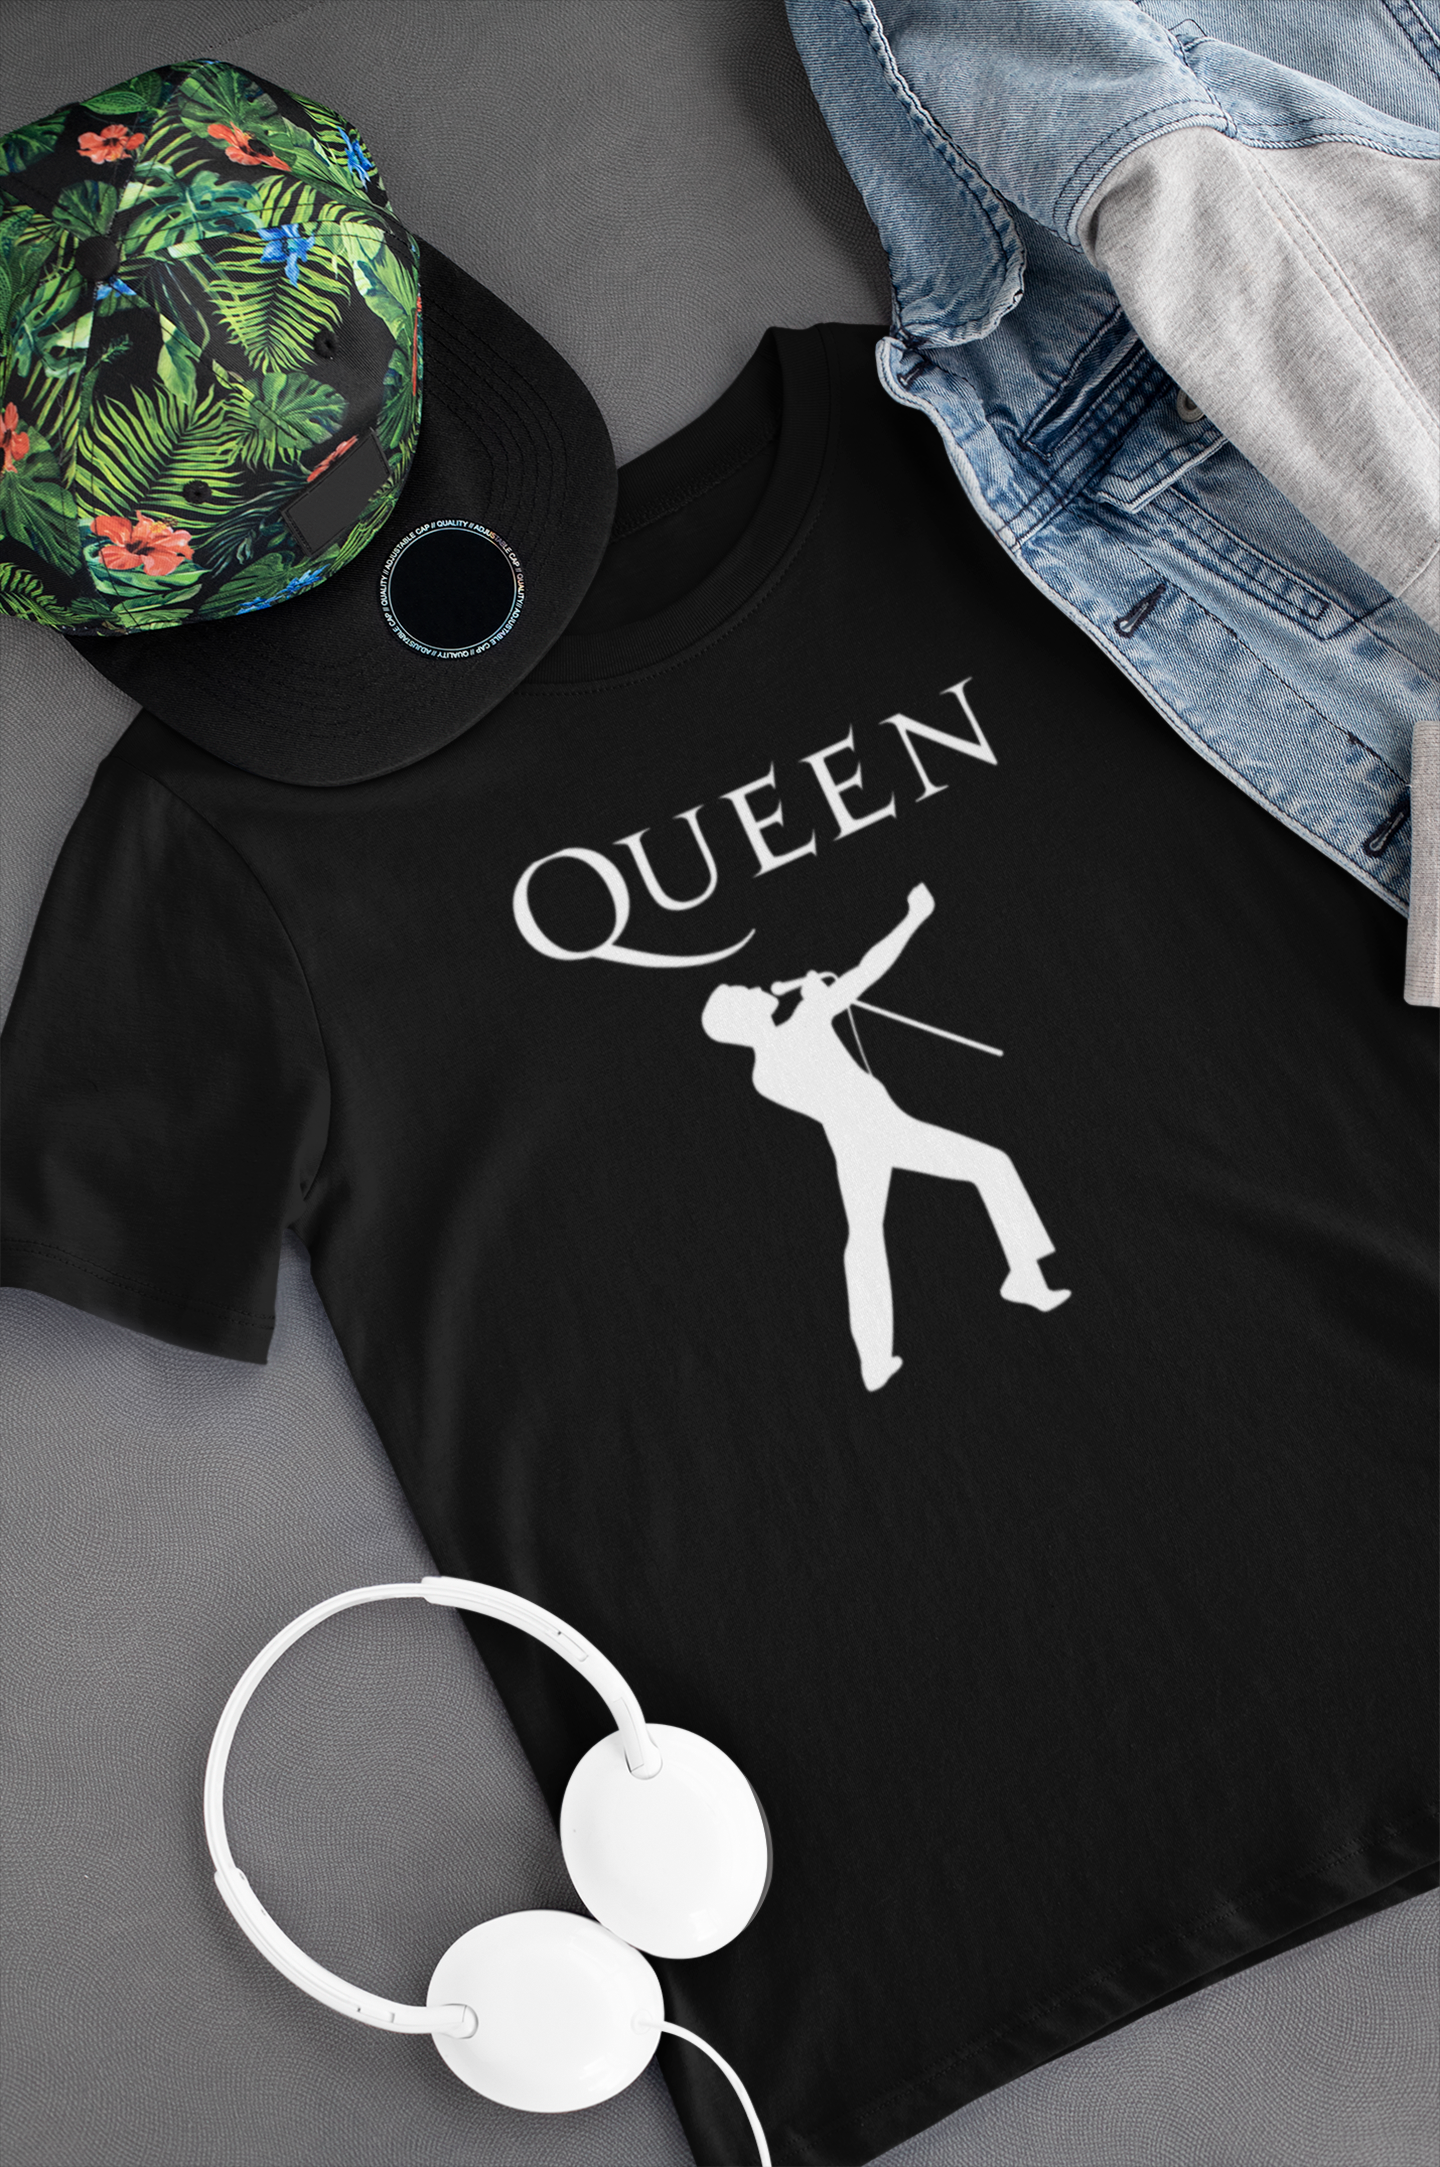 Camiseta "Queen" Freddy Mercury - Música